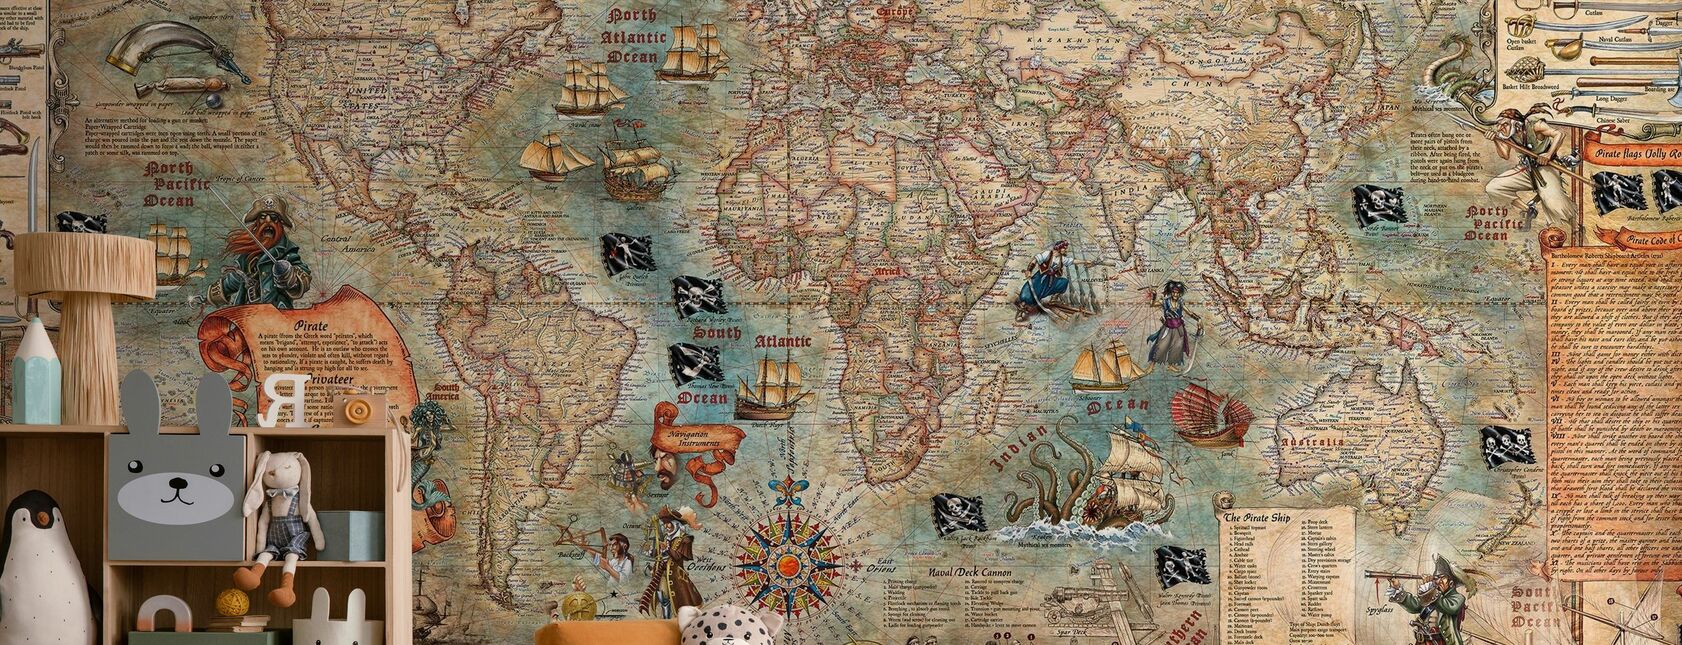 Pirate Map - Wallpaper - Kids Room